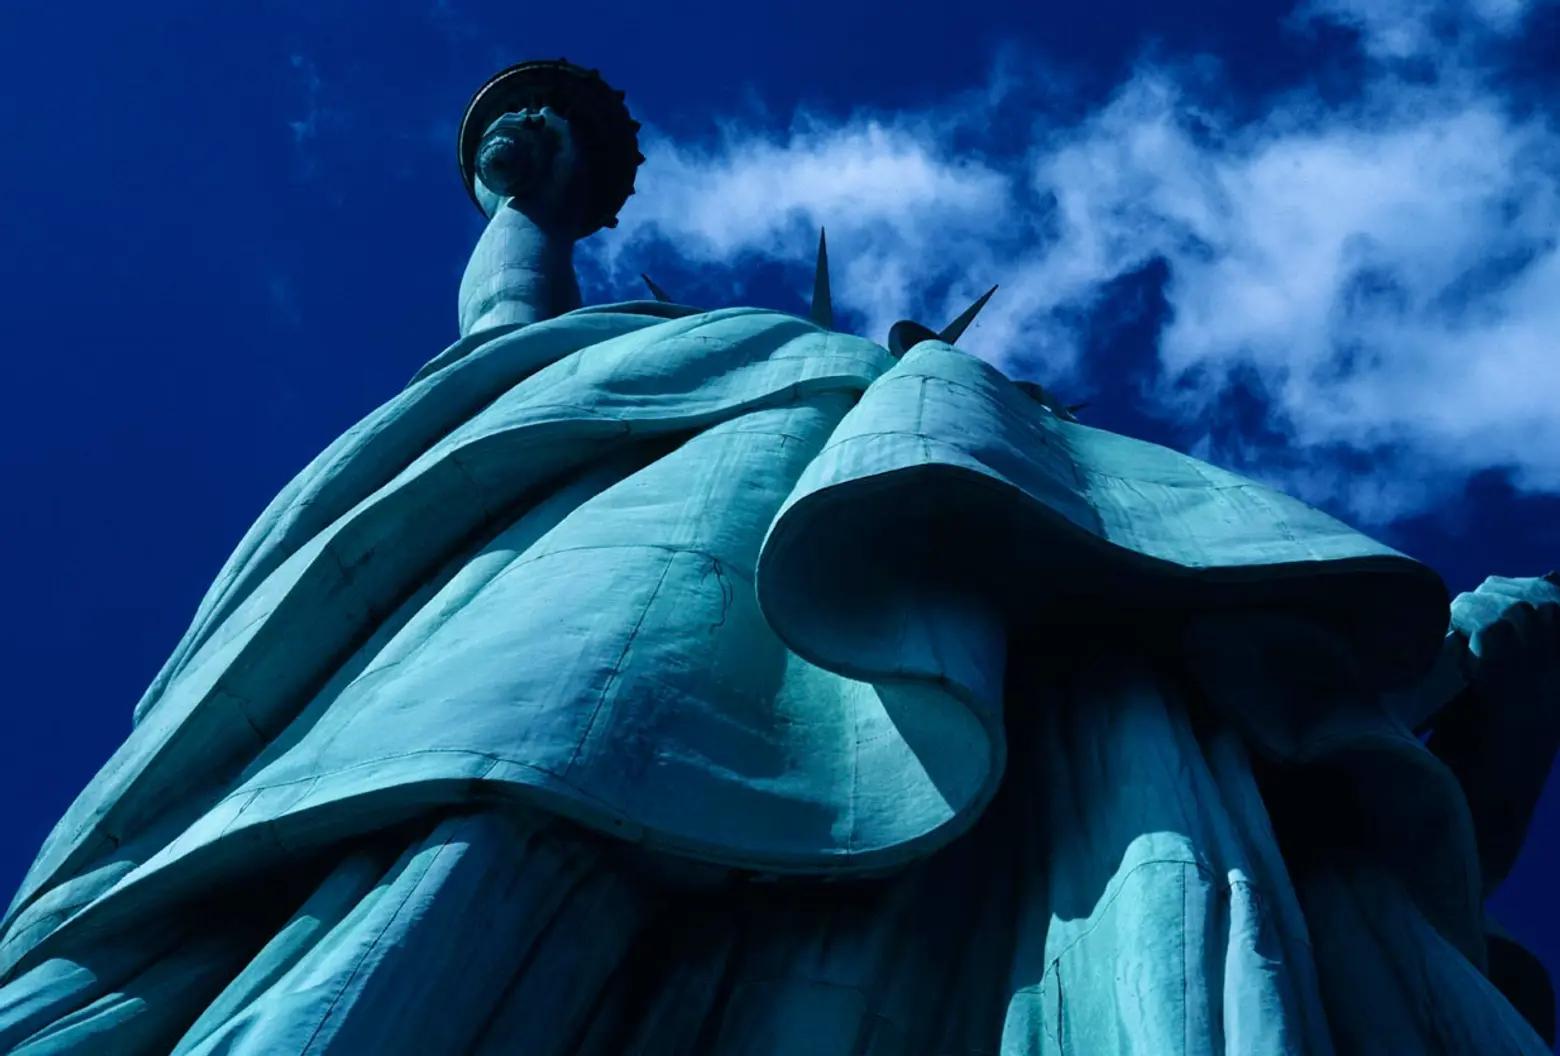 statue of liberty birthday, statue of liberty sky